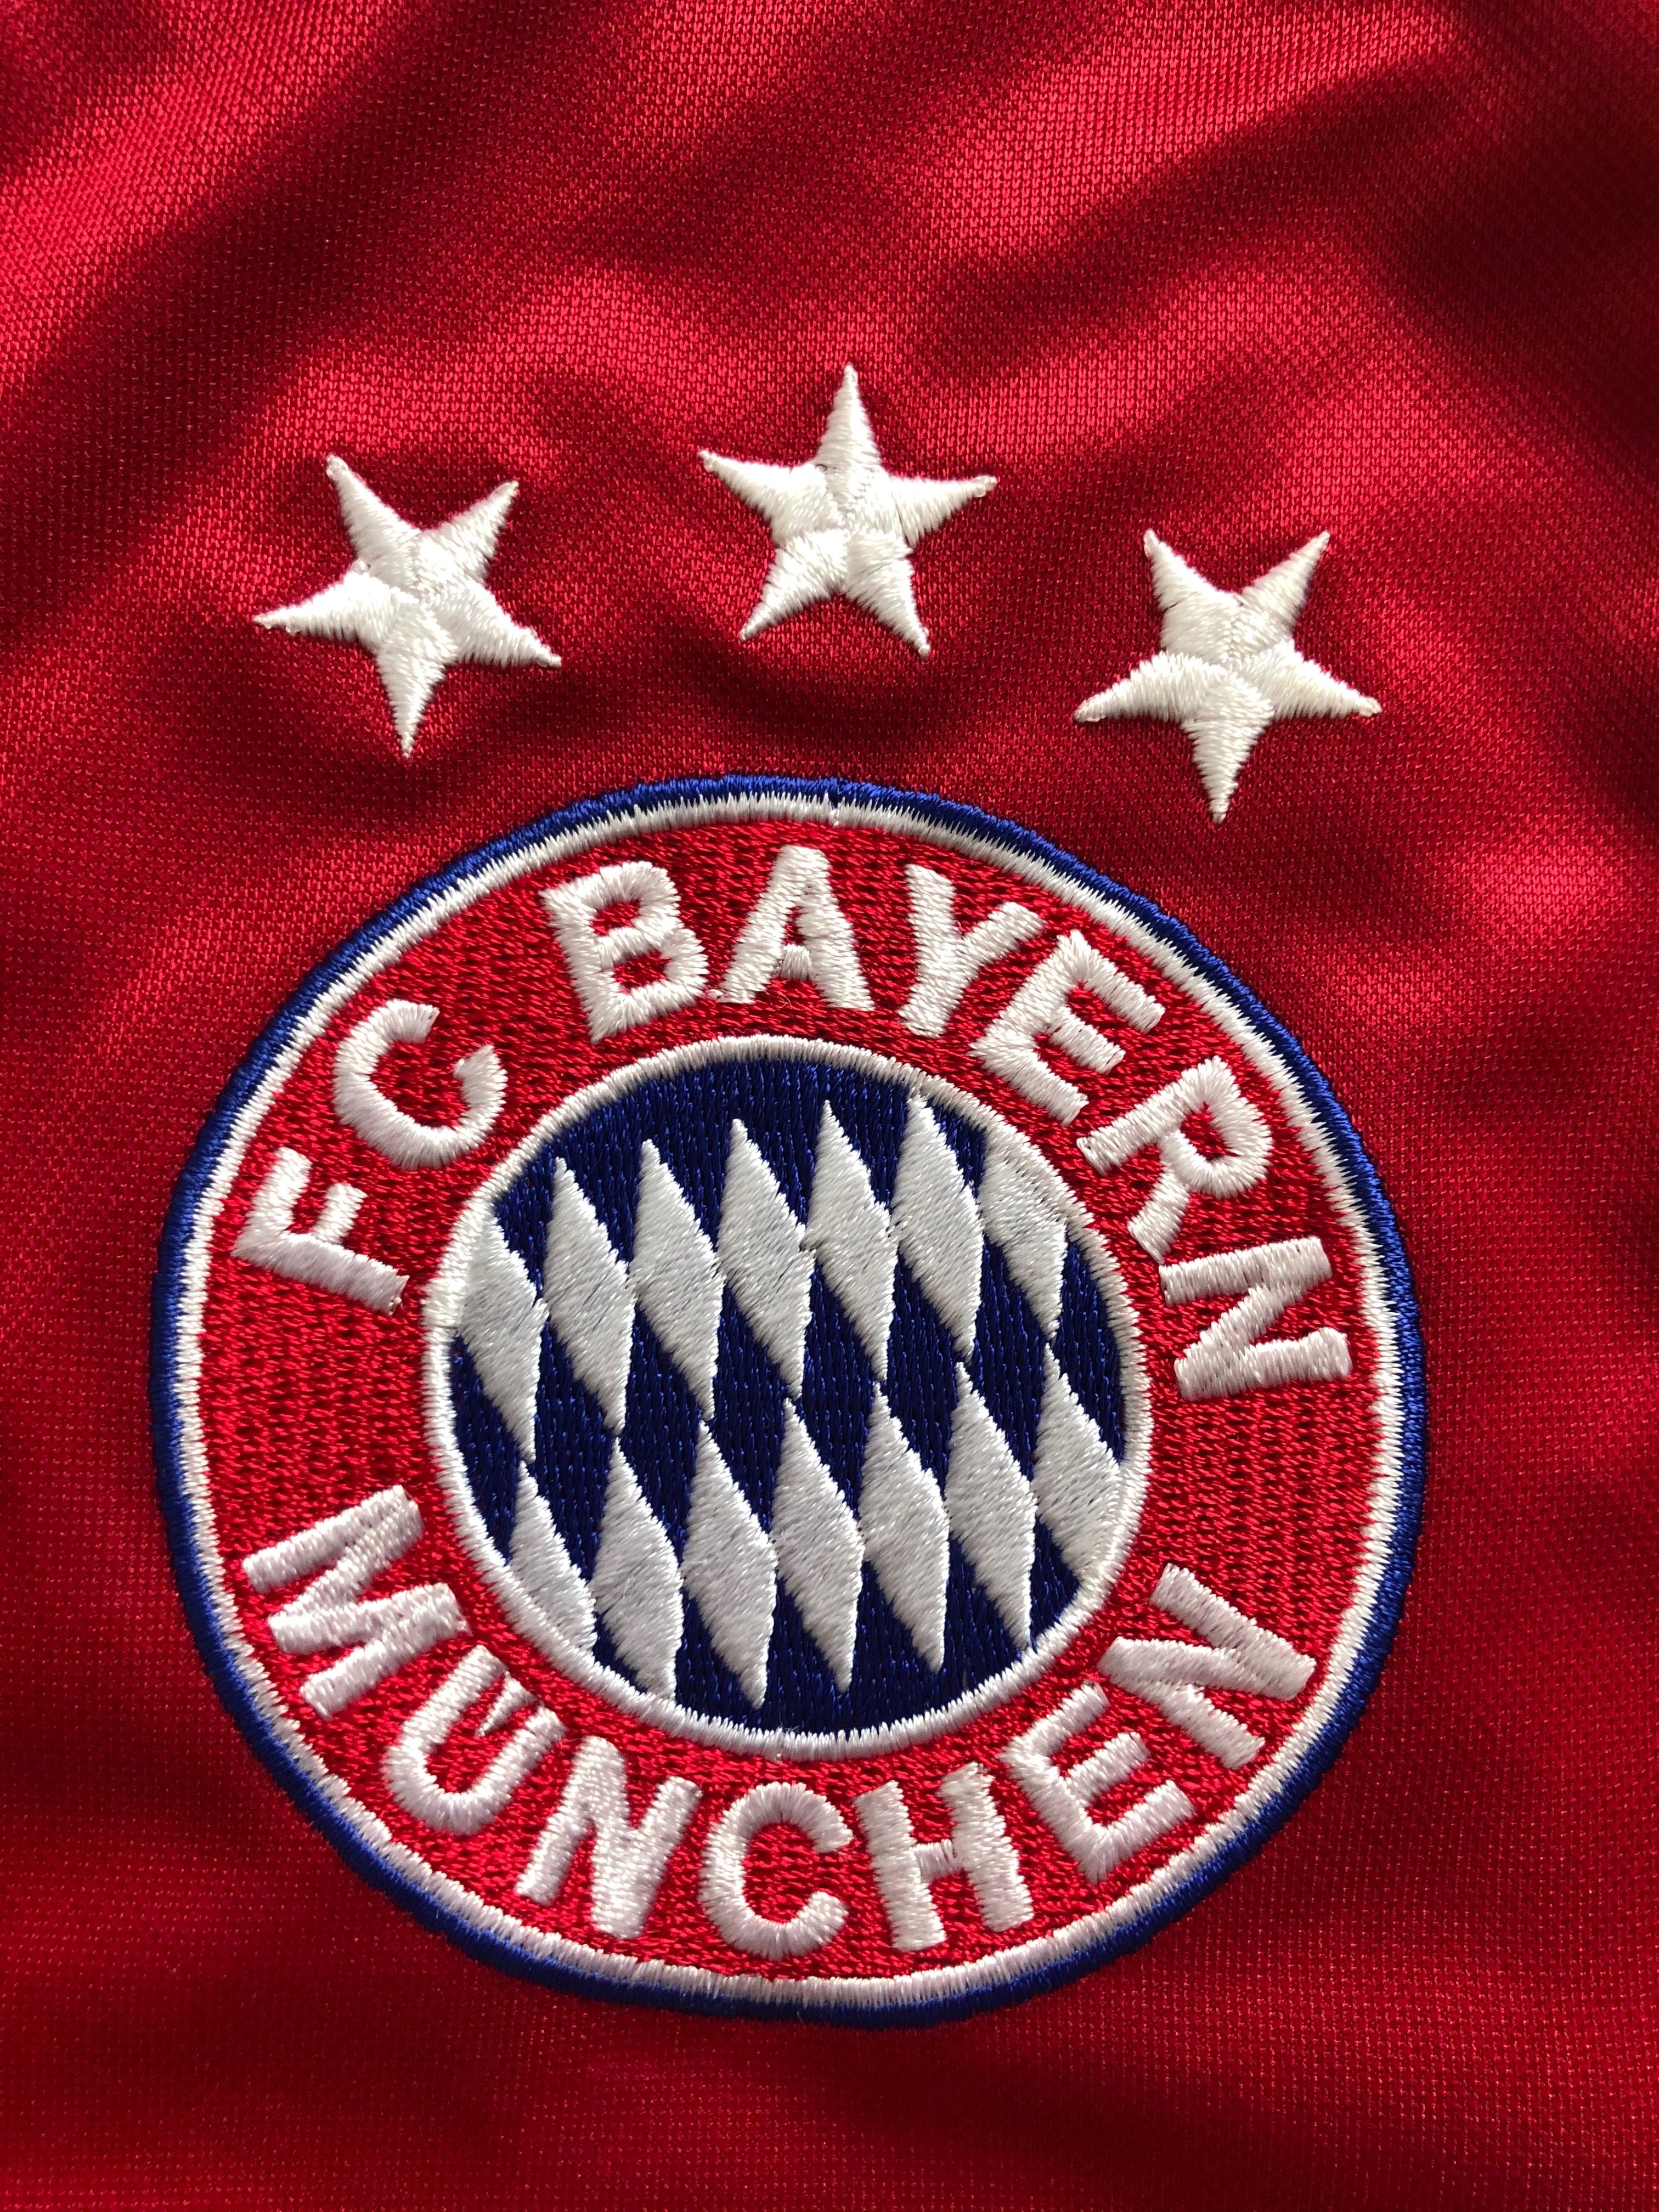 2004/05 Bayern Munich *Player Issue* Maillot L/S Domicile Ballack #13 (XL) 7,5/10